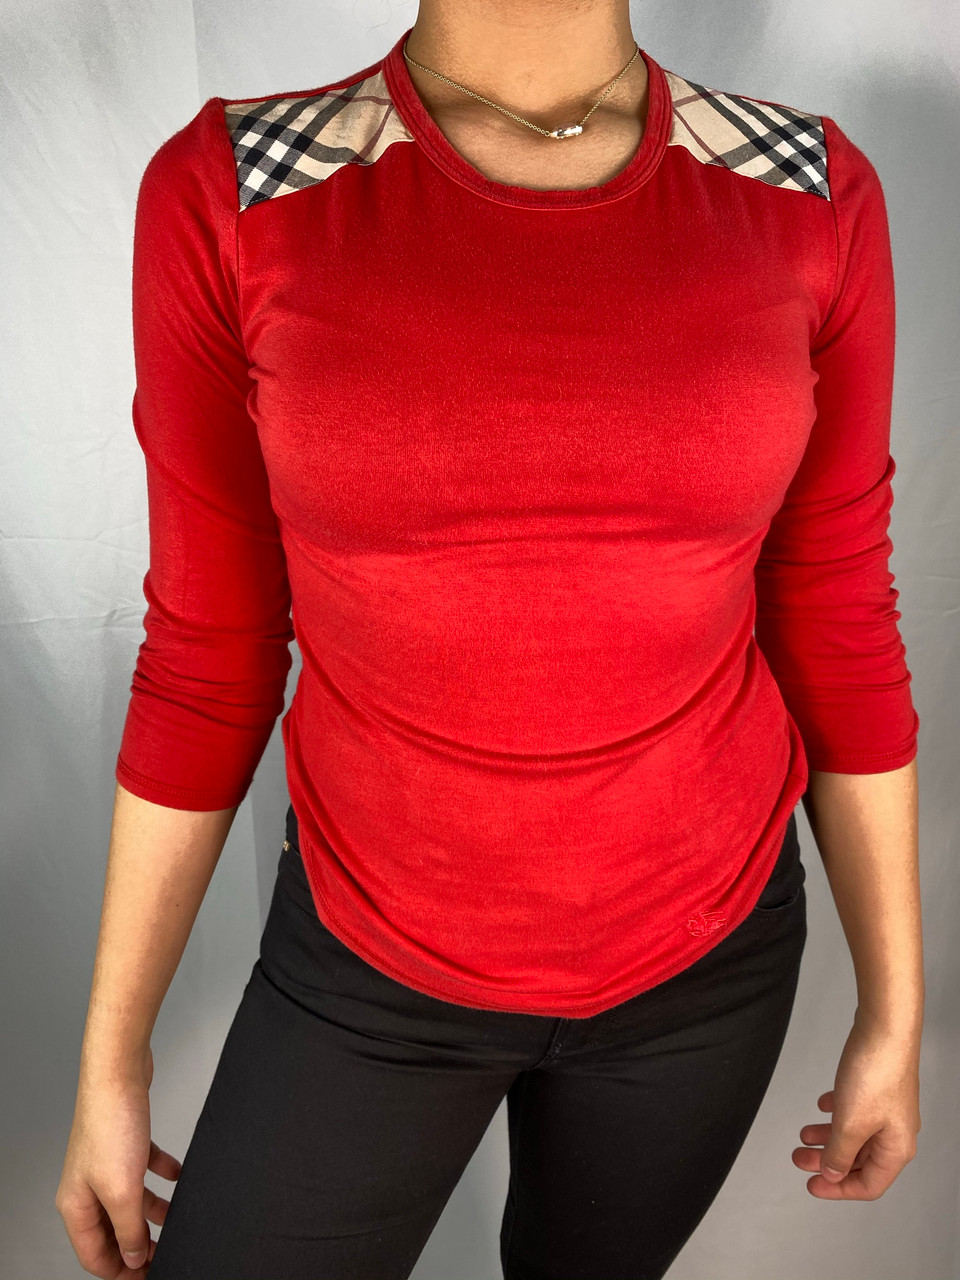 Burberry London Red Plaid Shoulder Long Sleeve T-Shirt Top